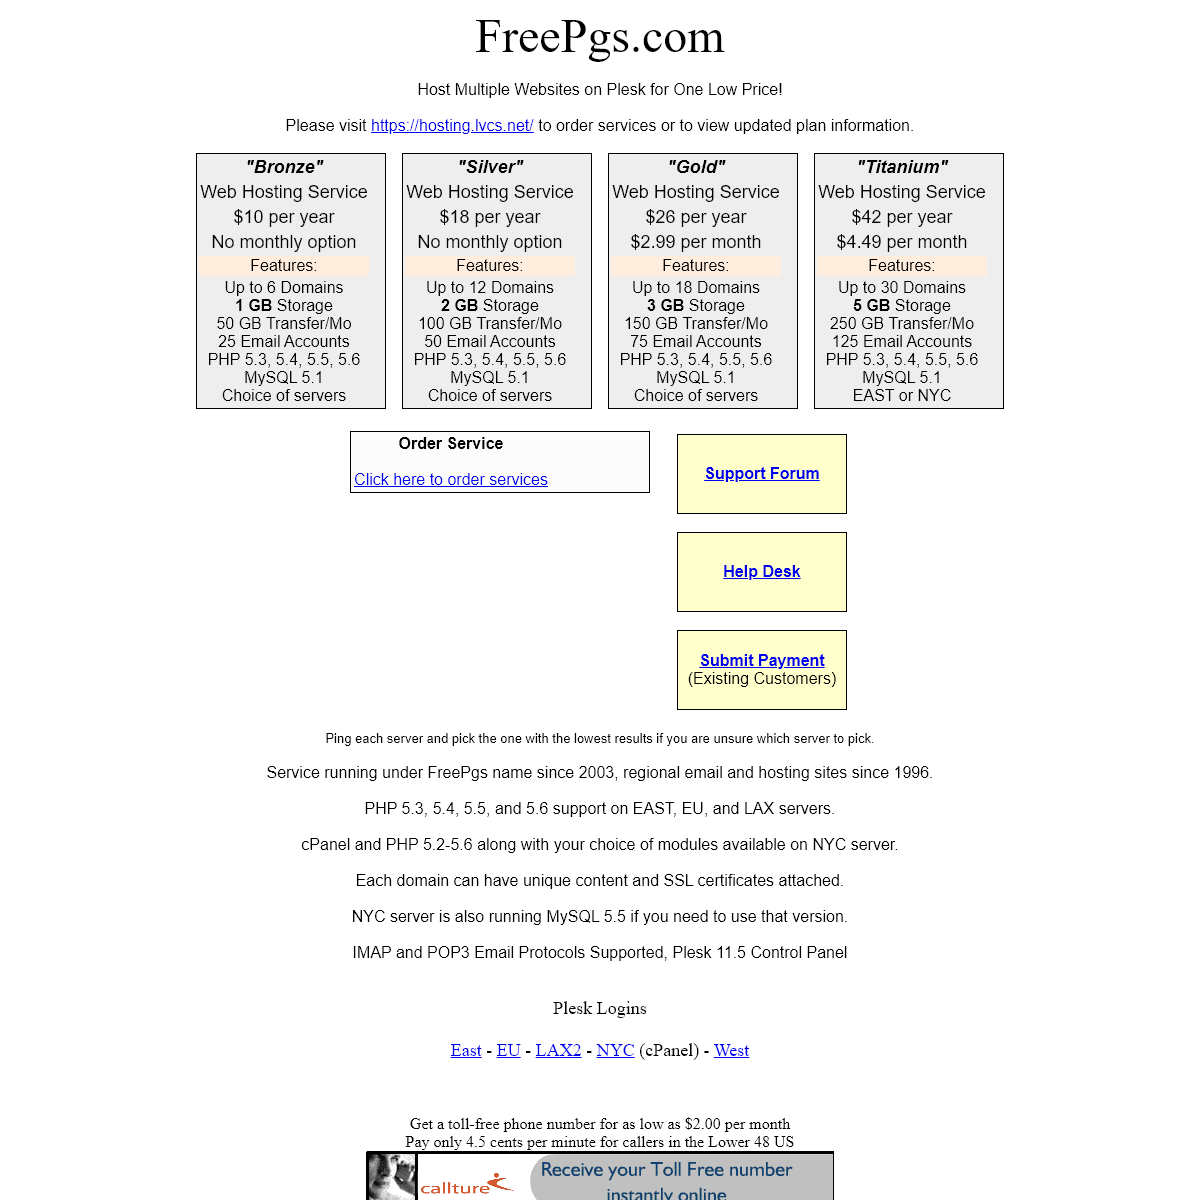 A complete backup of freepgs.com